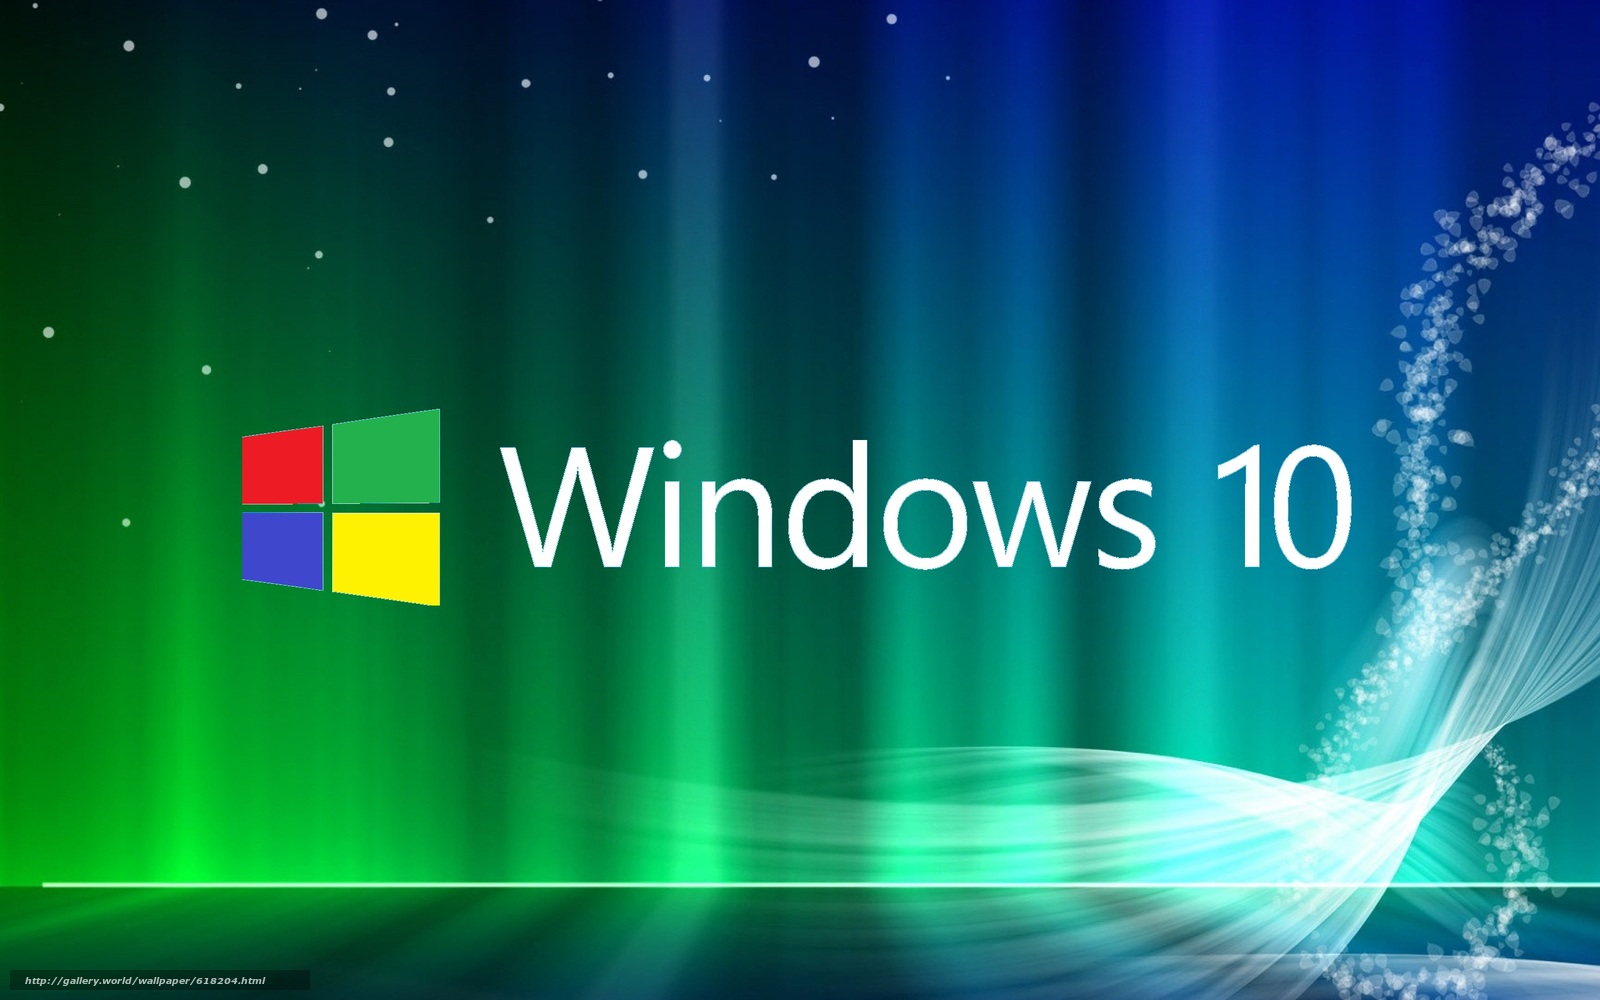      Microsoft - Windows 10